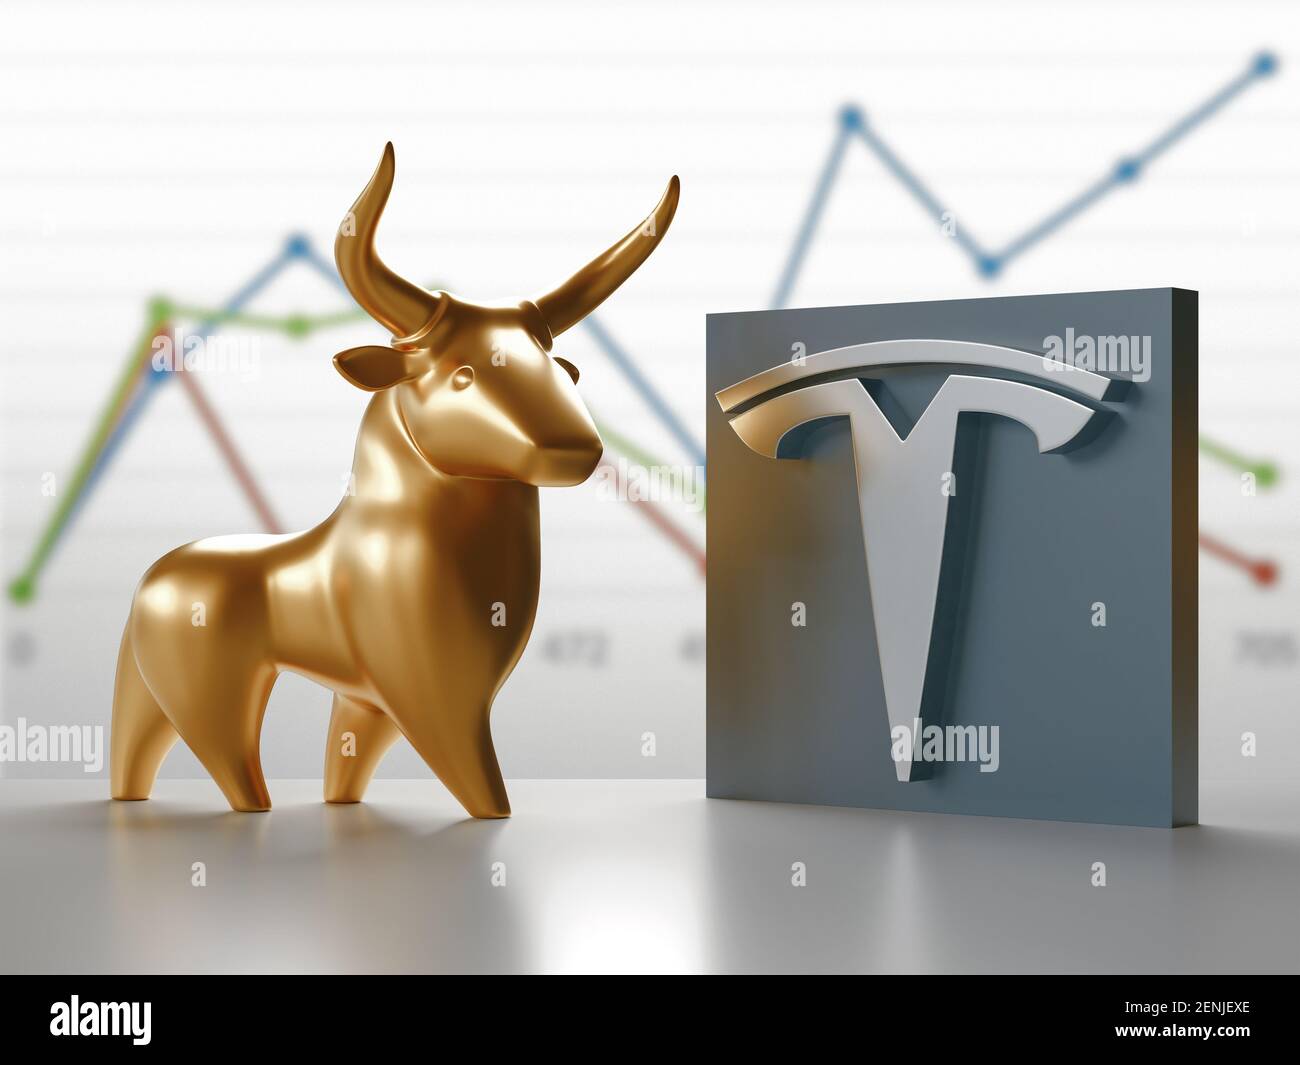 Milan, Italy: February 26, 2021: Tesla Motors logo and Bull Market Stock Chart. Economy Concept. Professional 3d rendering Stock Photo